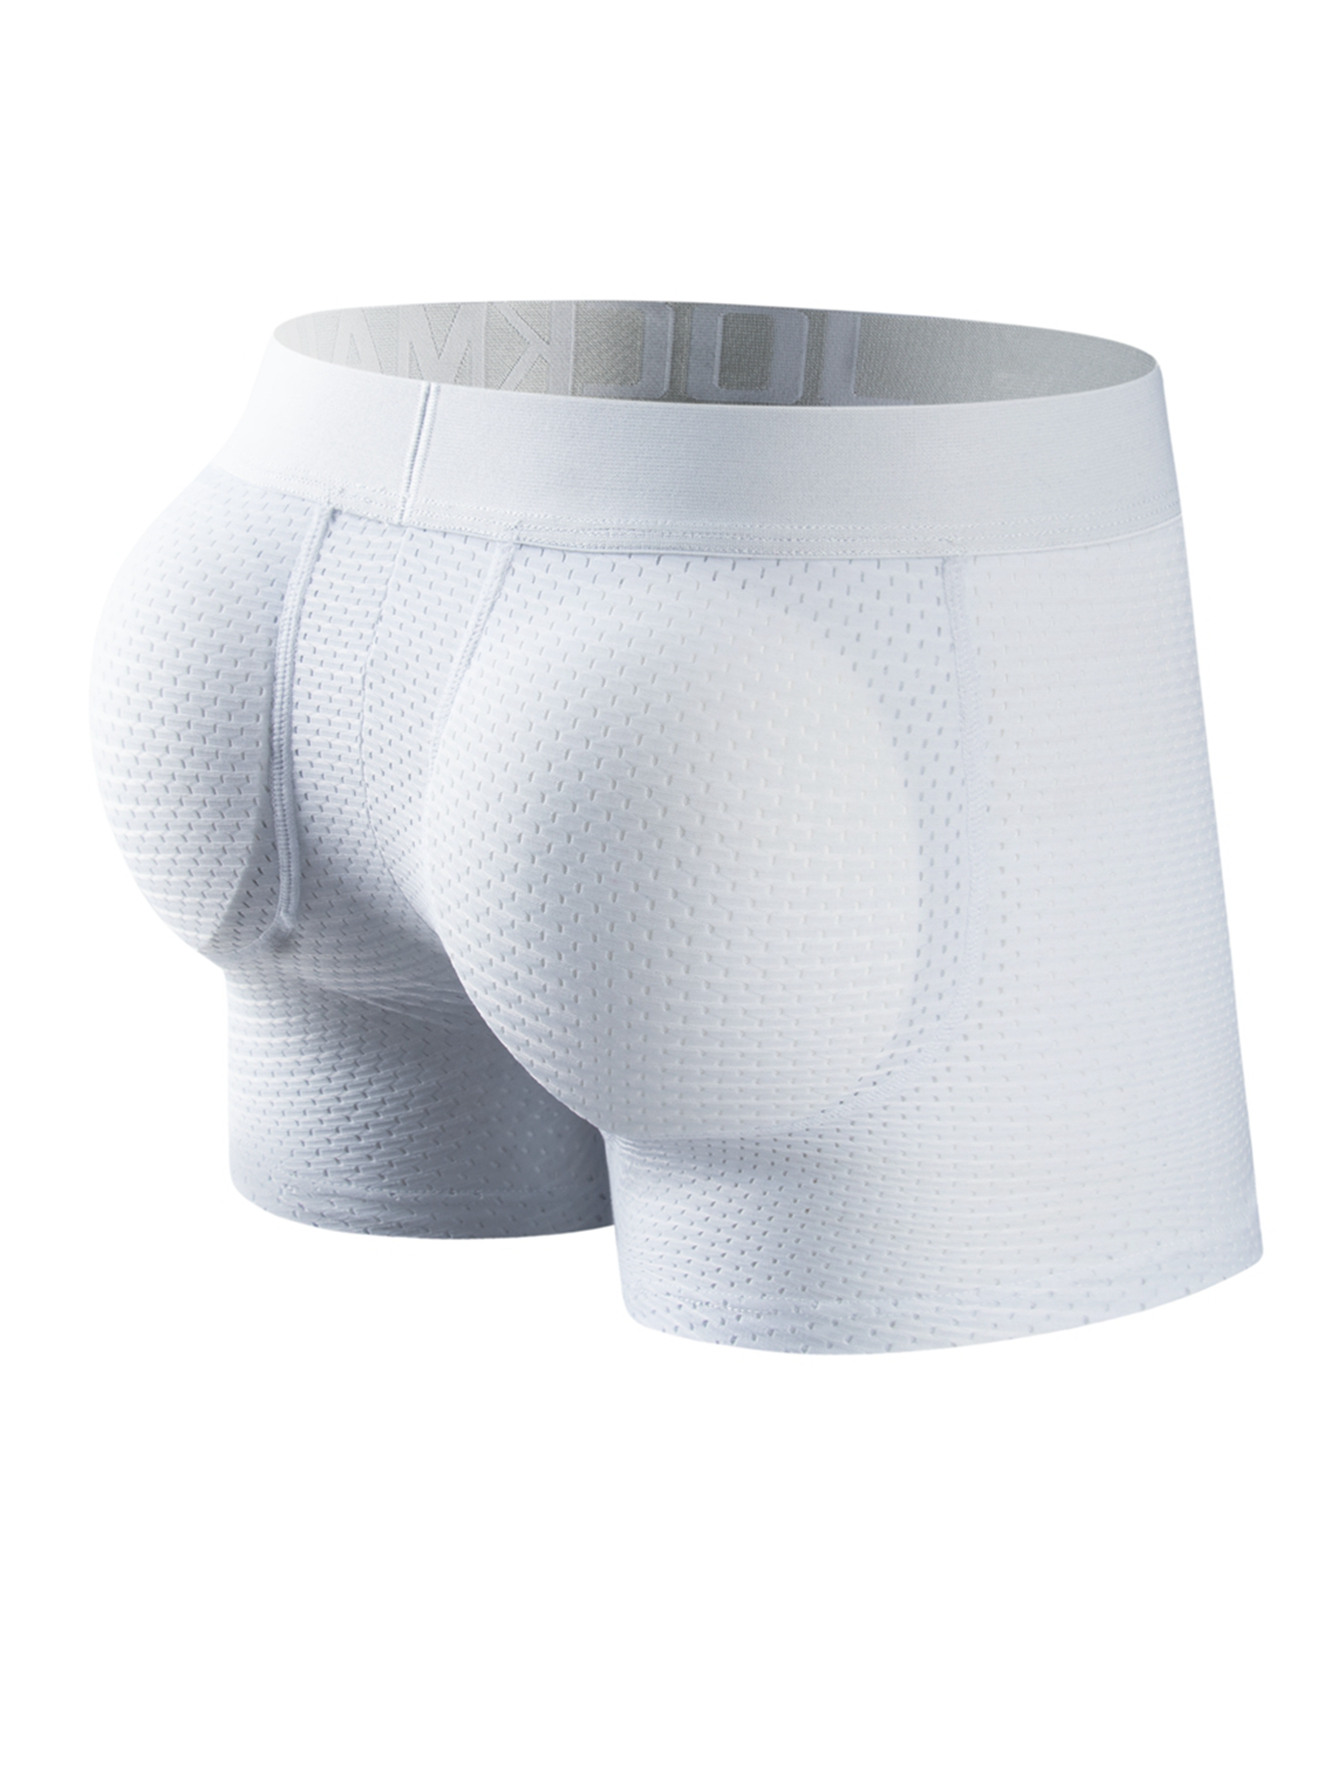 Soft booty shorts boxer for men mens underwear For Comfort